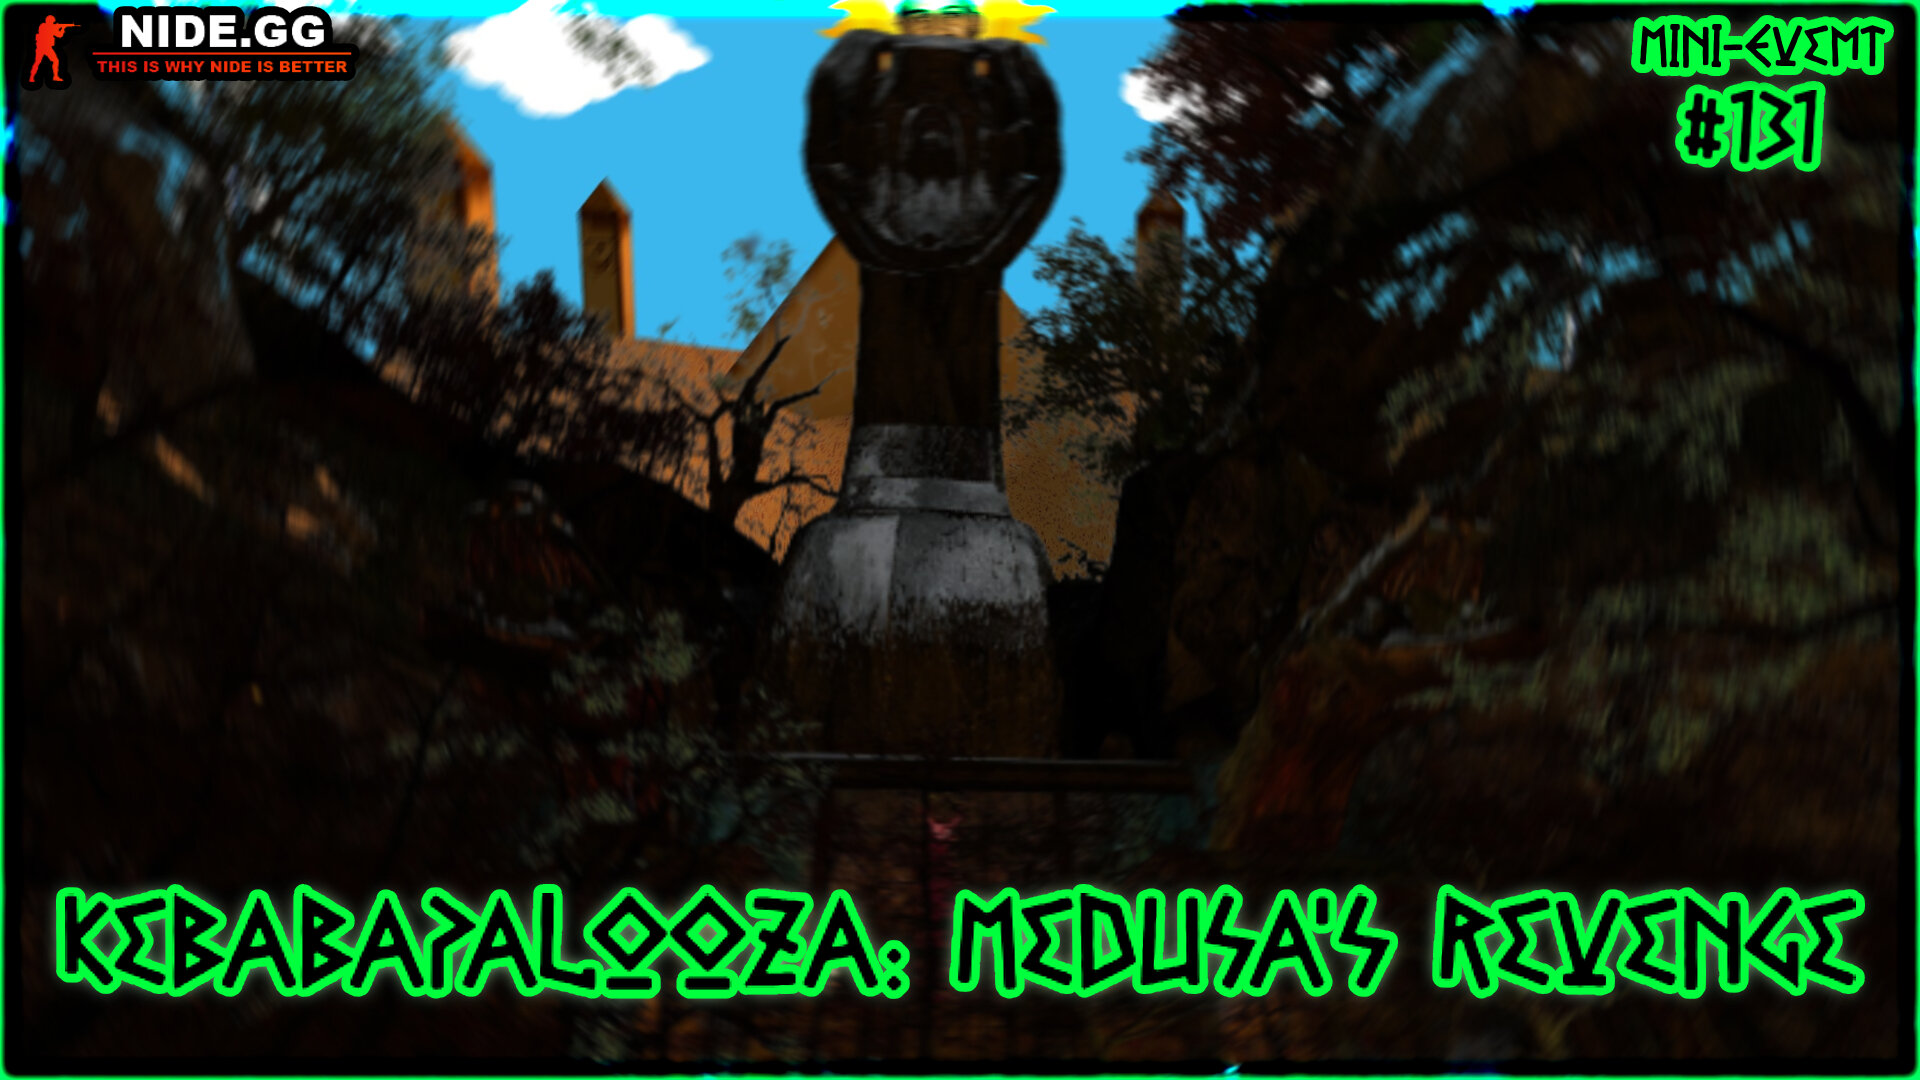 More information about "CS:S Zombie Escape Mini-Event #131 - Kebabapalooza: Medusa's Revenge"